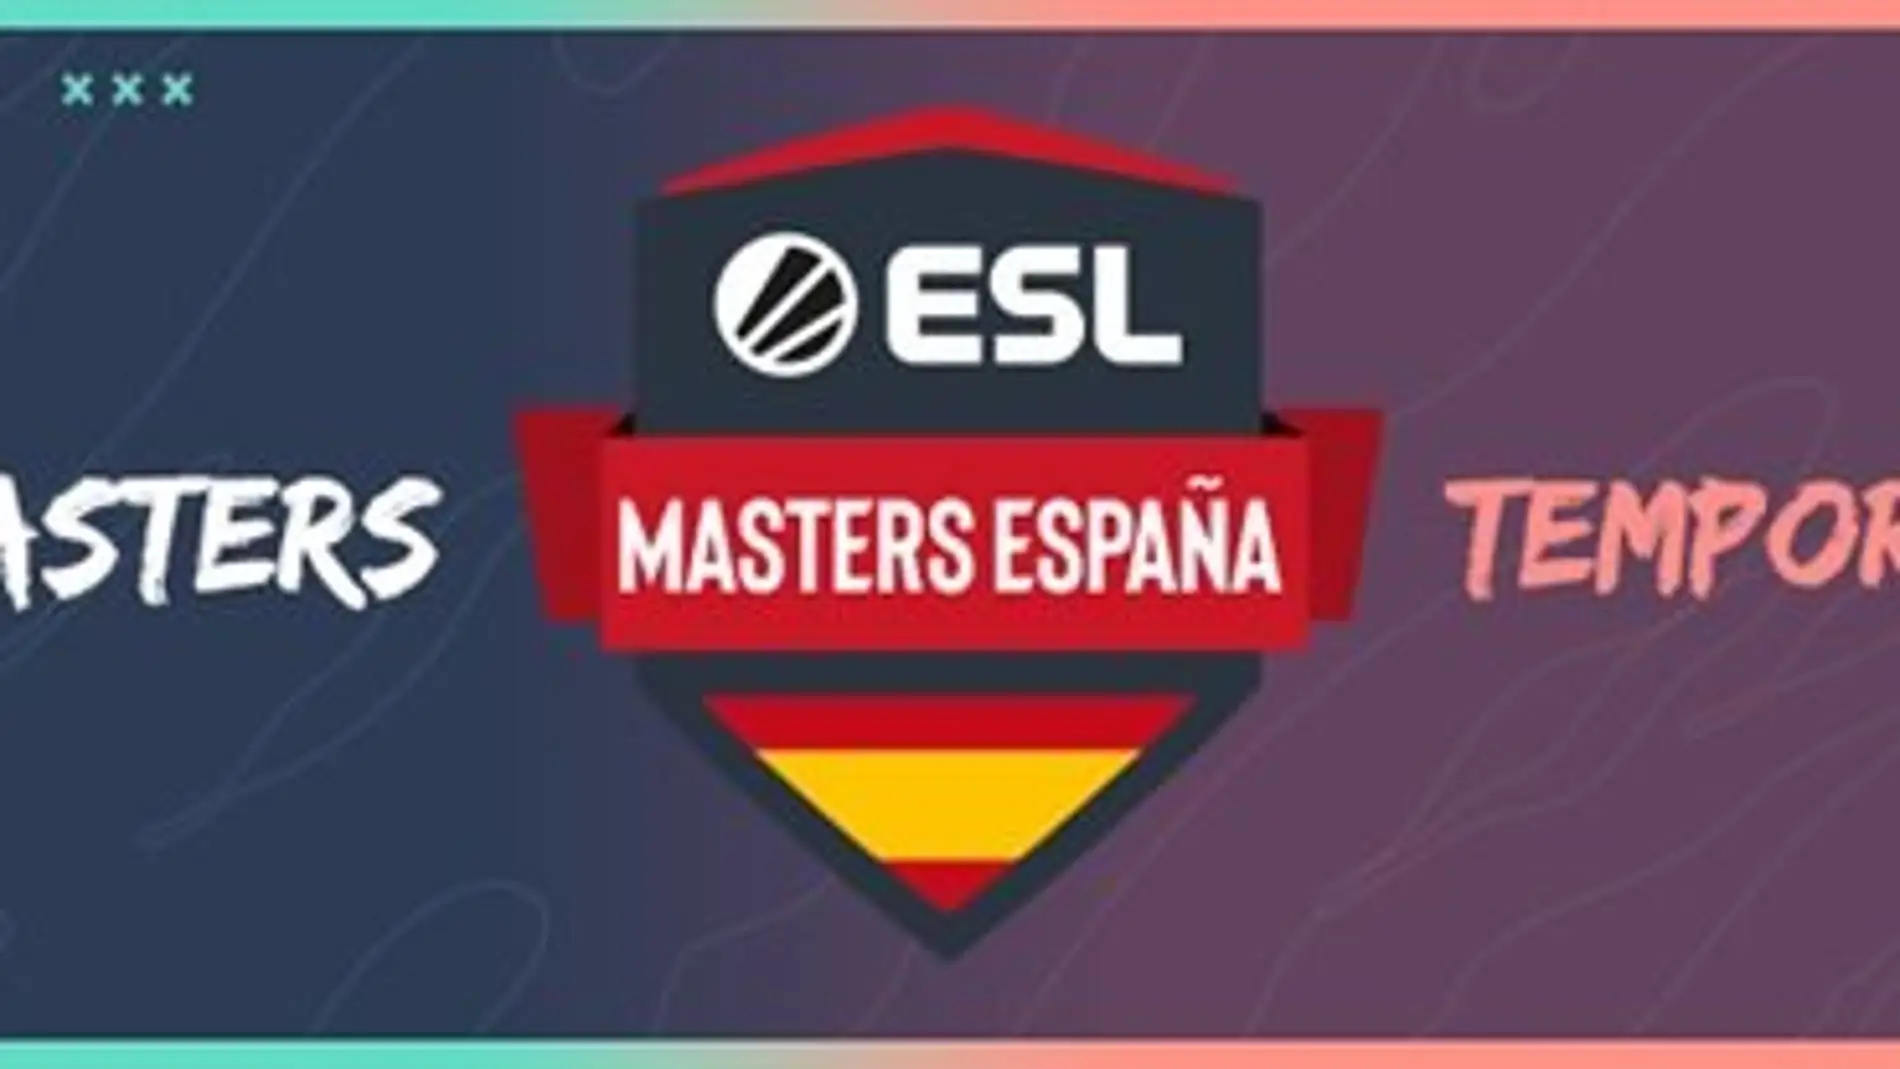 Primera jornada de la ESL Masters España